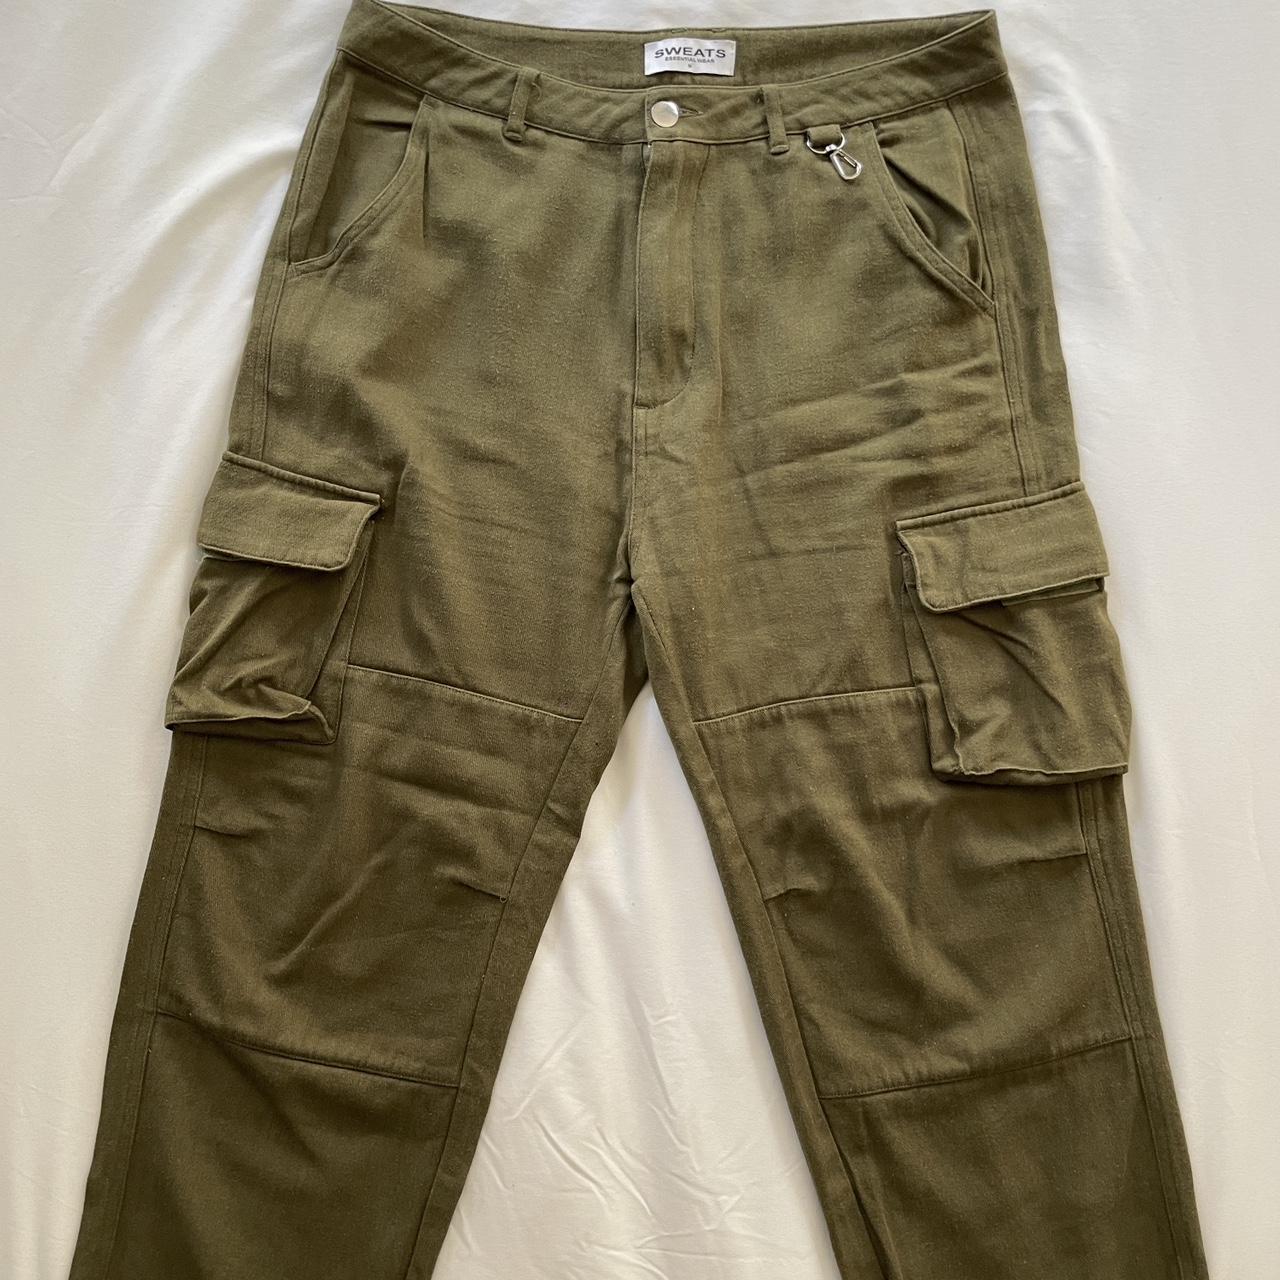 lowrise flare army green cargo pants Length 27/26 - Depop